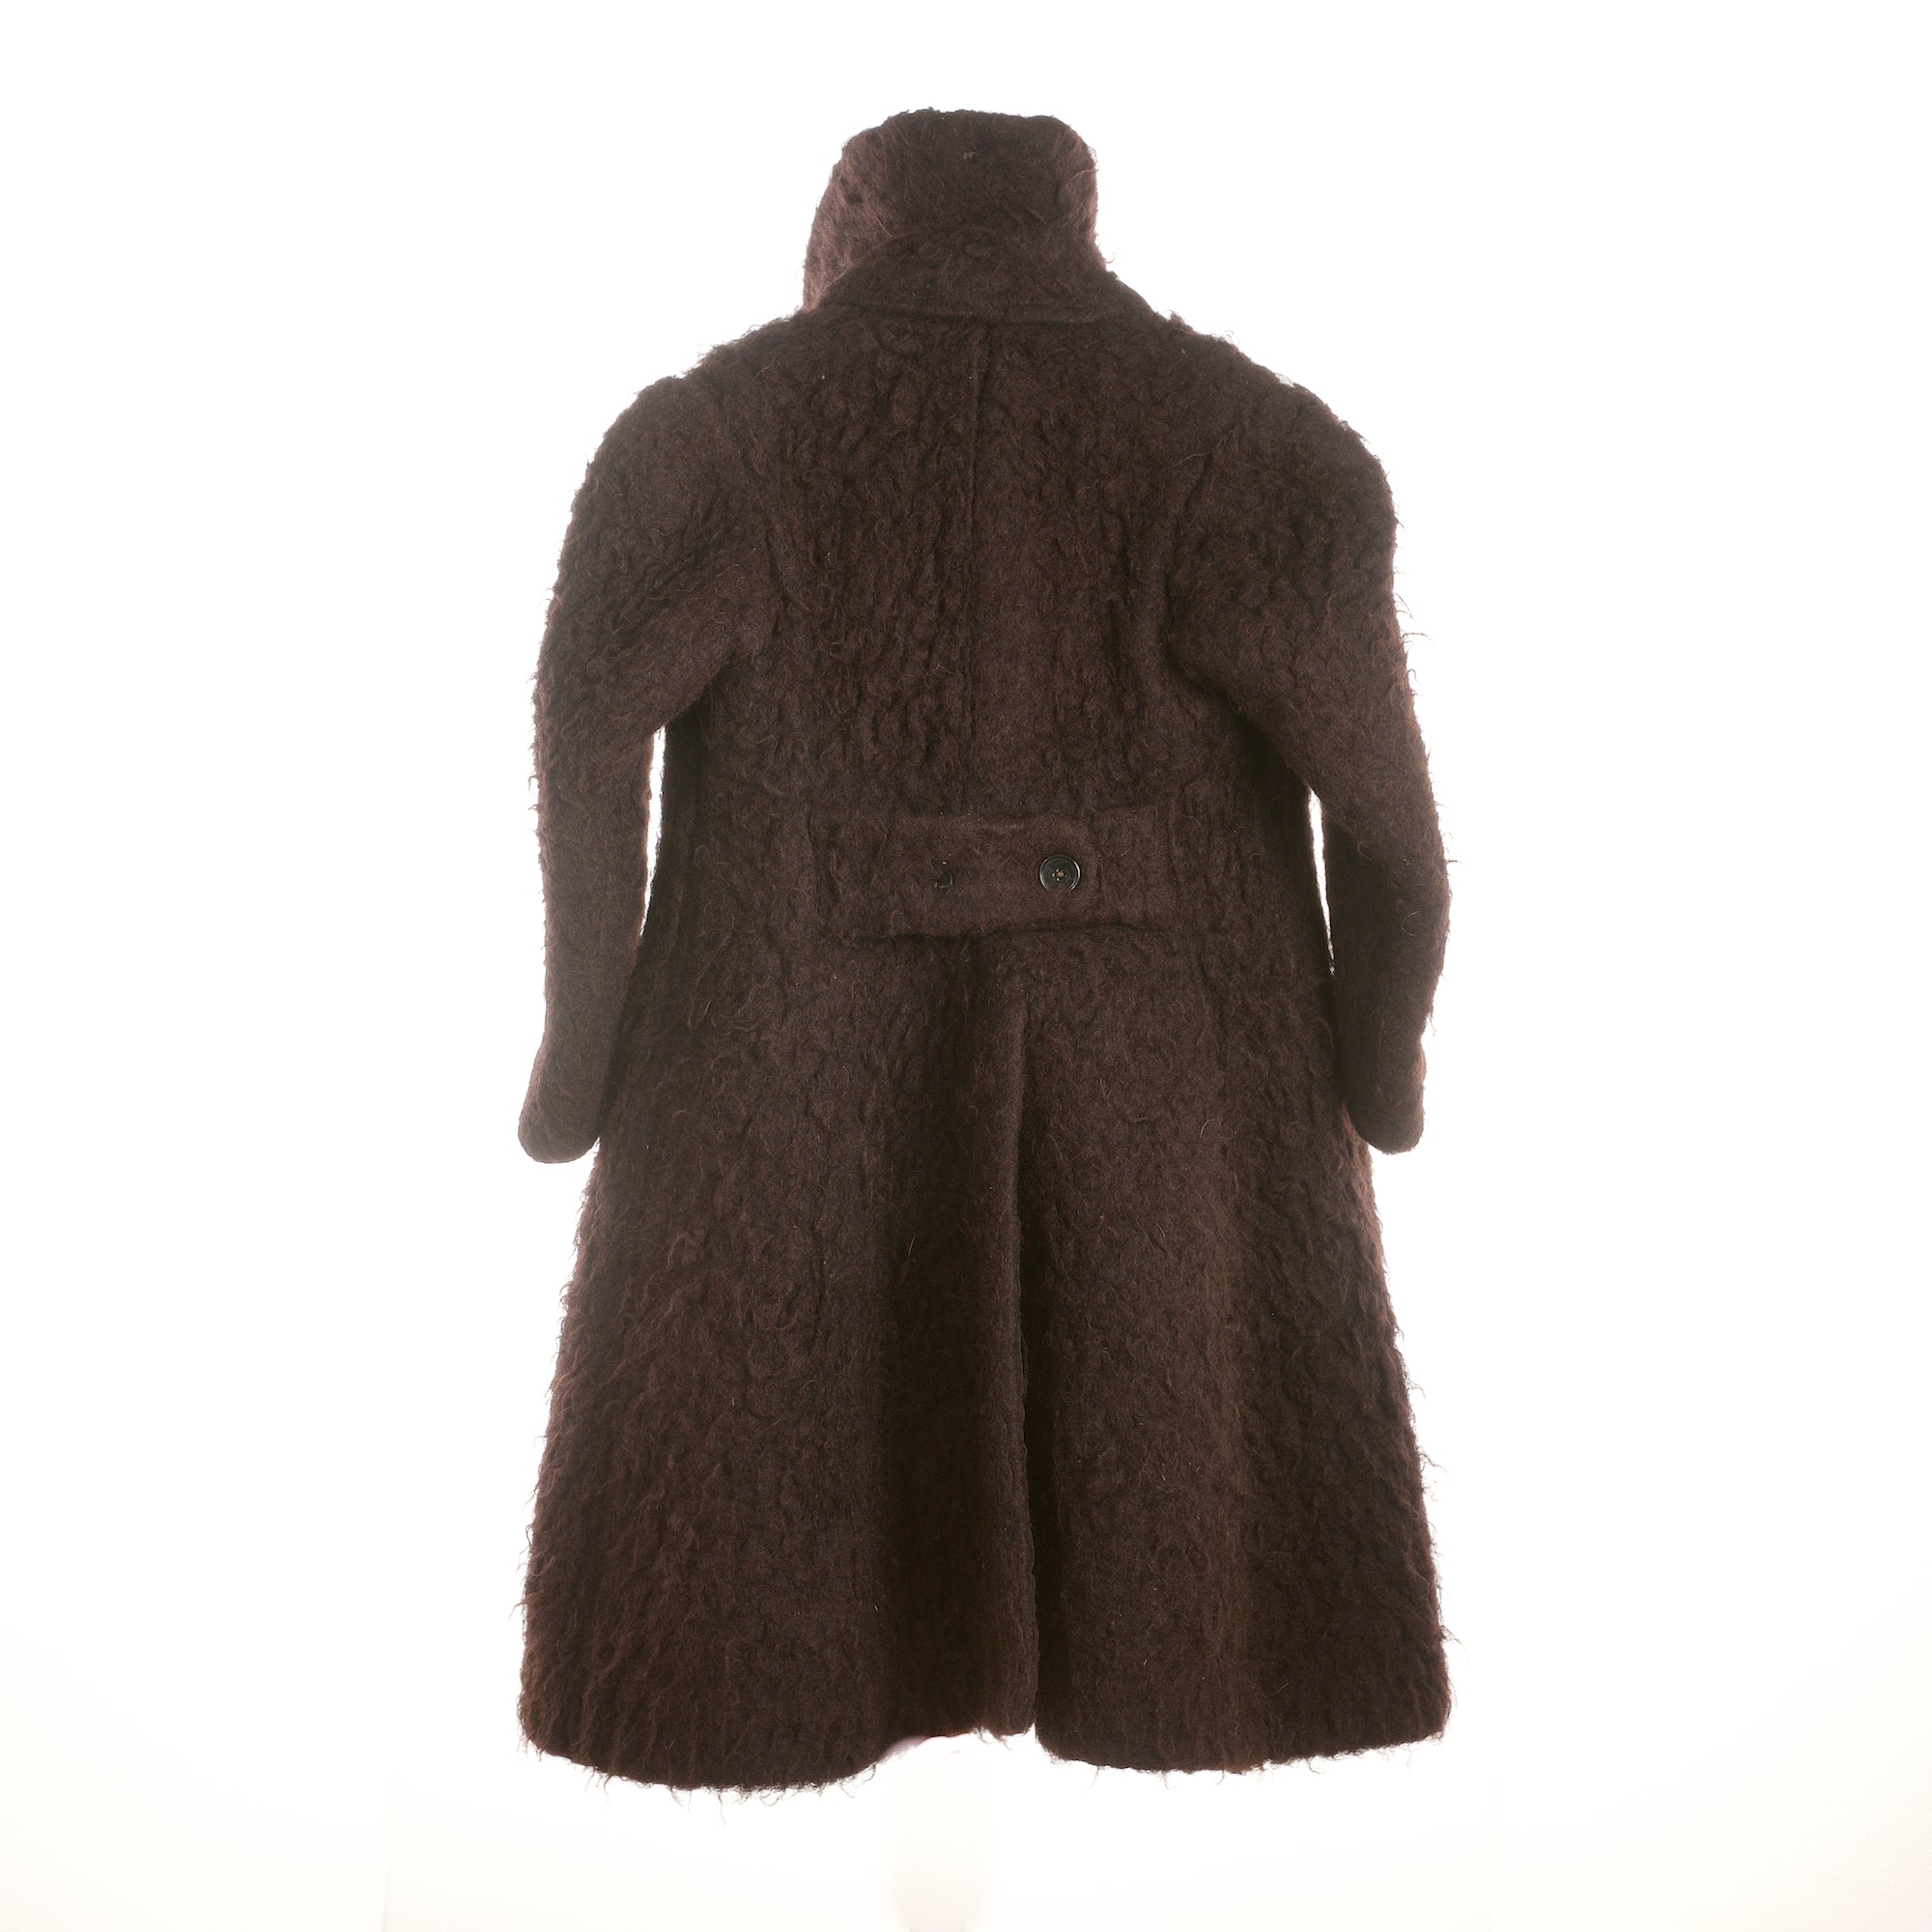 American Buffalo Robe Company - Antique Woven Bison Cloth Coat